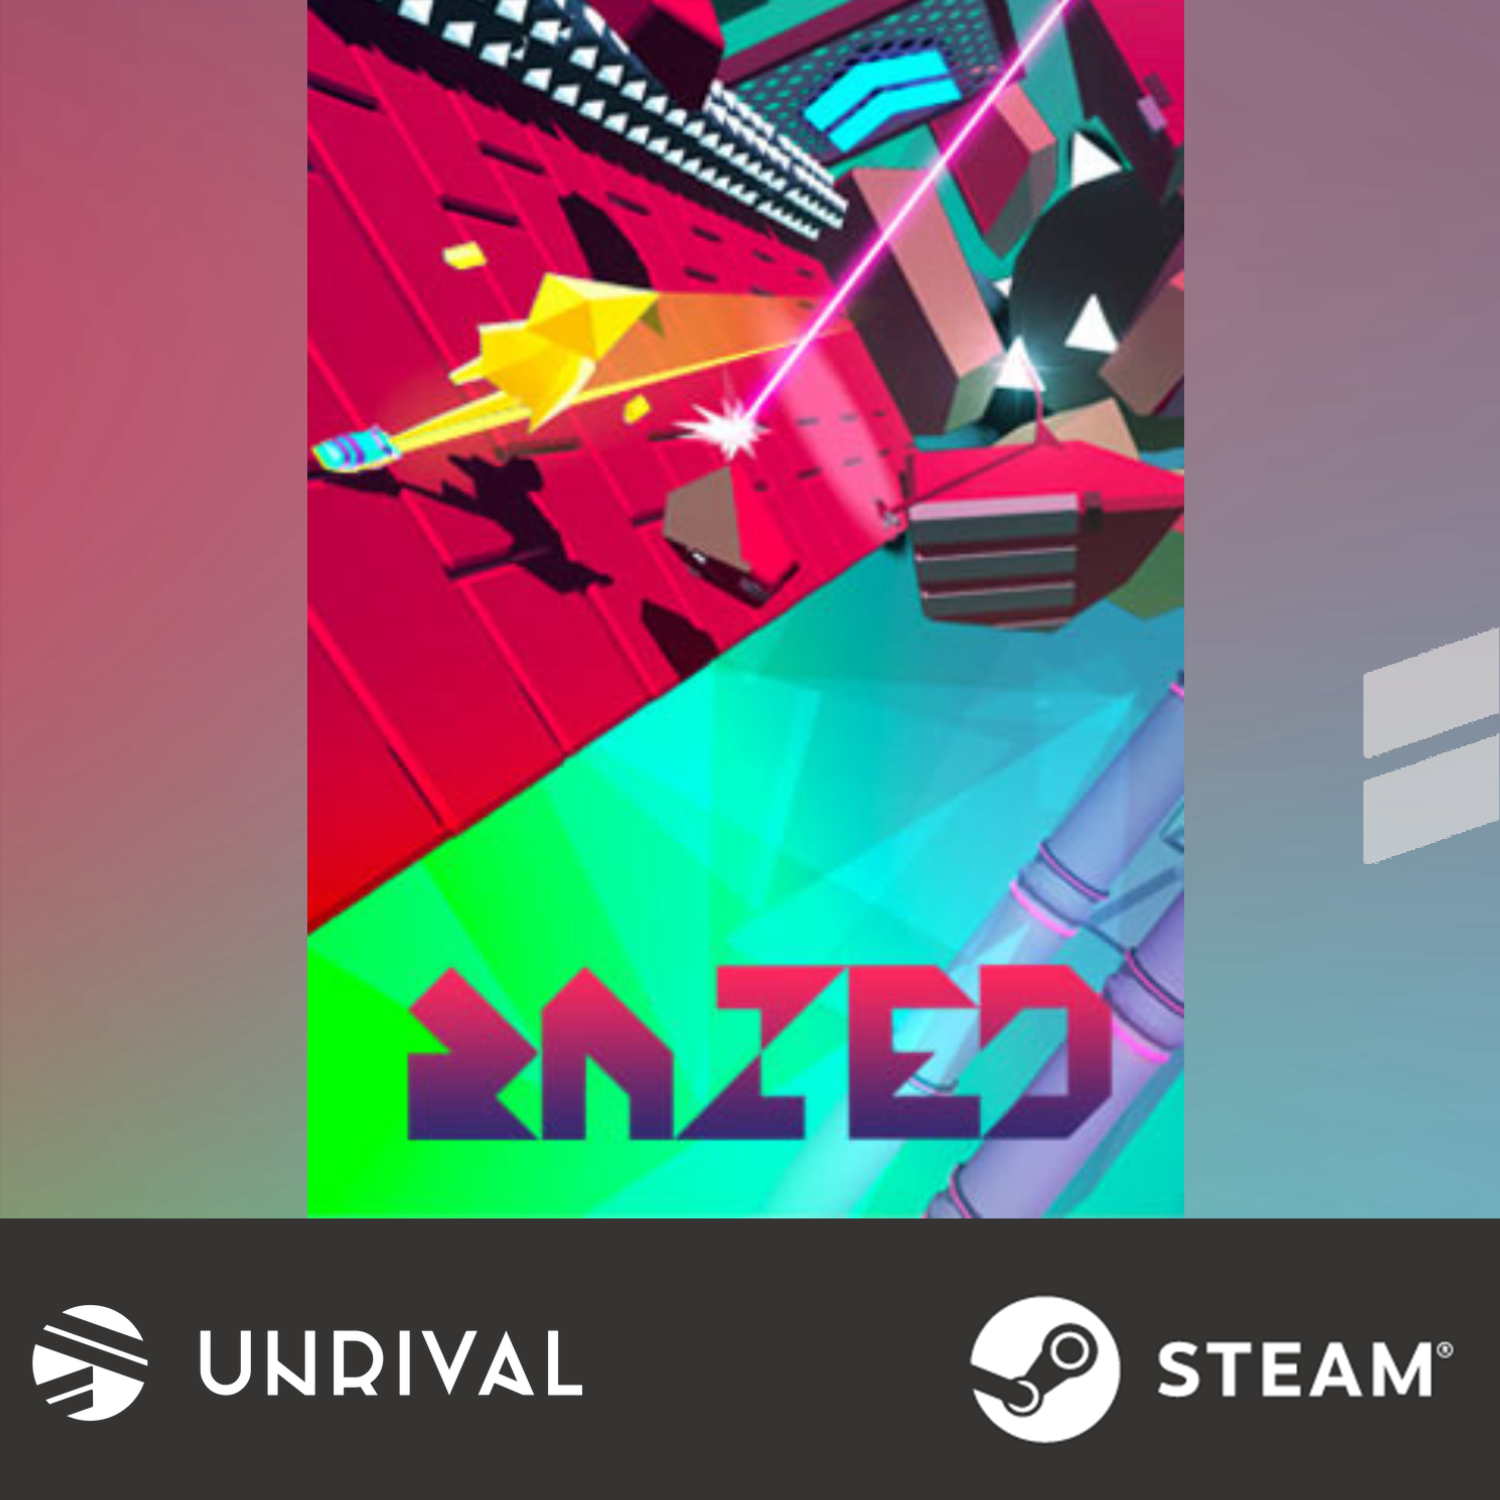 Razed PC Digital Download Game (Single Player) - Unrival